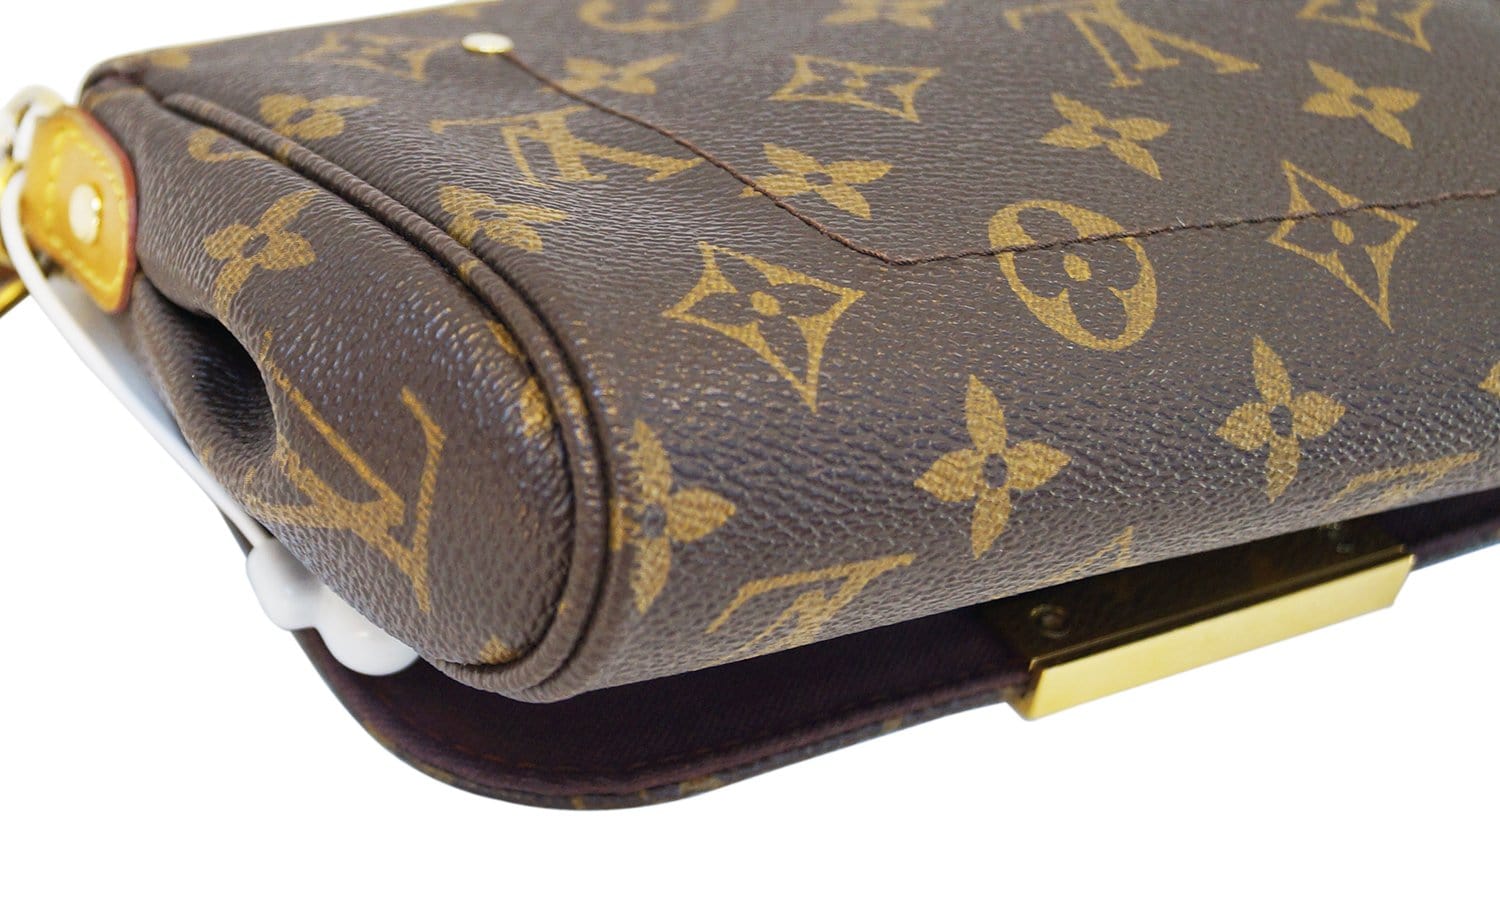 lv satchel straps for handbags